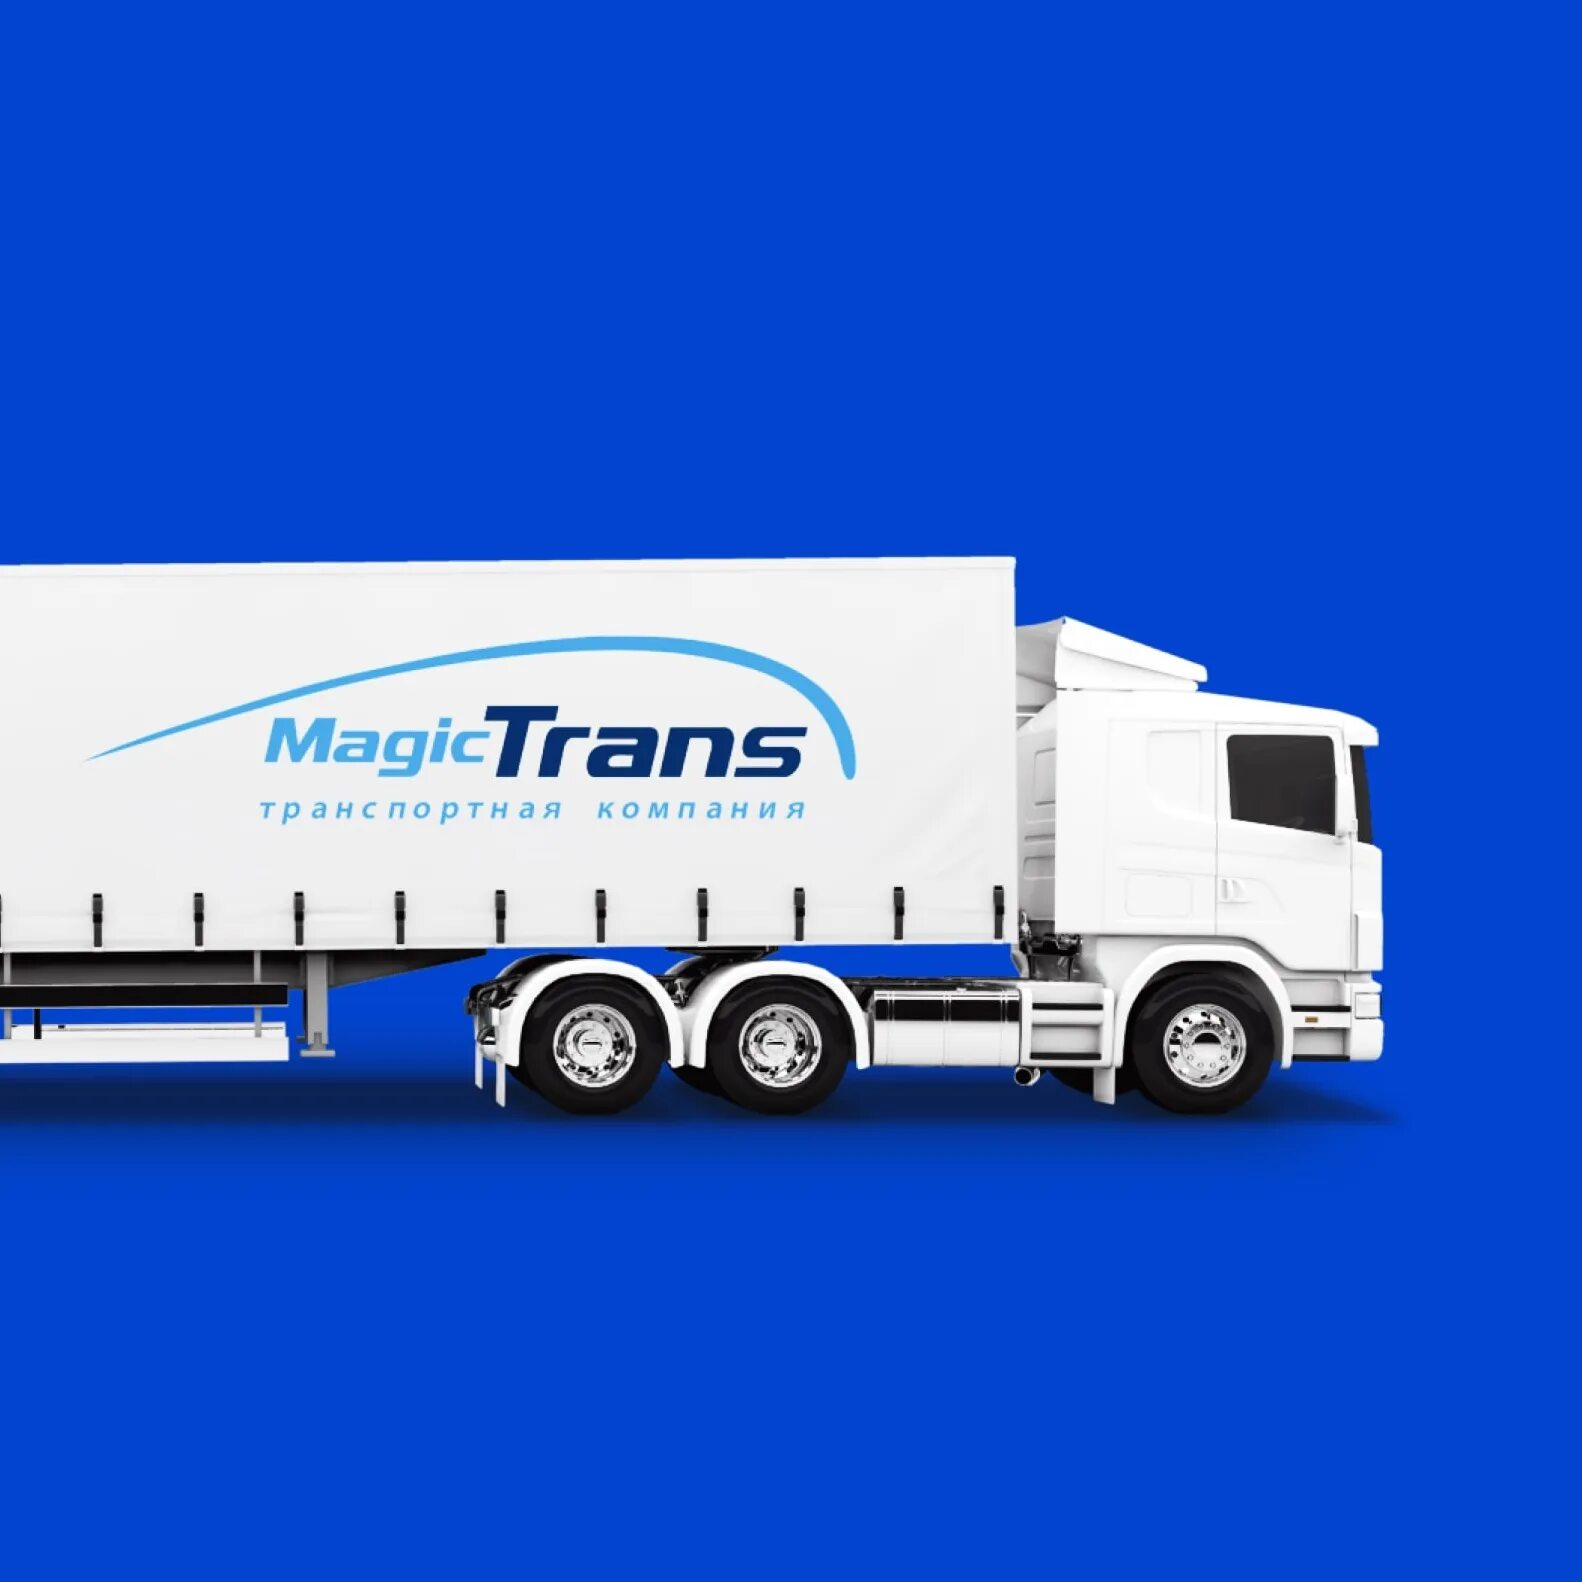 Транс транспортная компания. Мейджик транс. Magic Trans транспортная компания. Мейджик транс транспортная компания Москва.